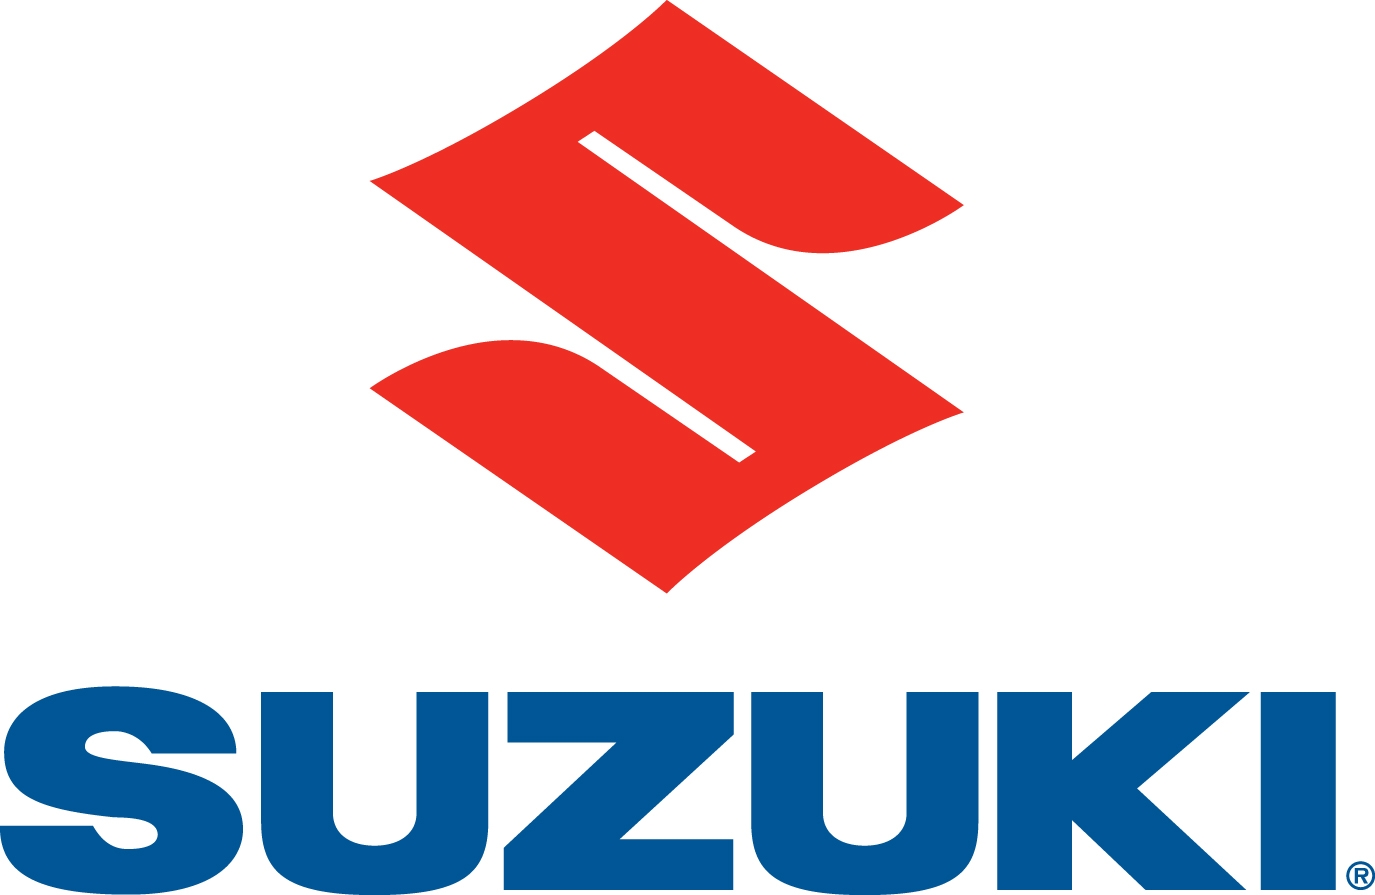 Suzuki reveals four new concept cars